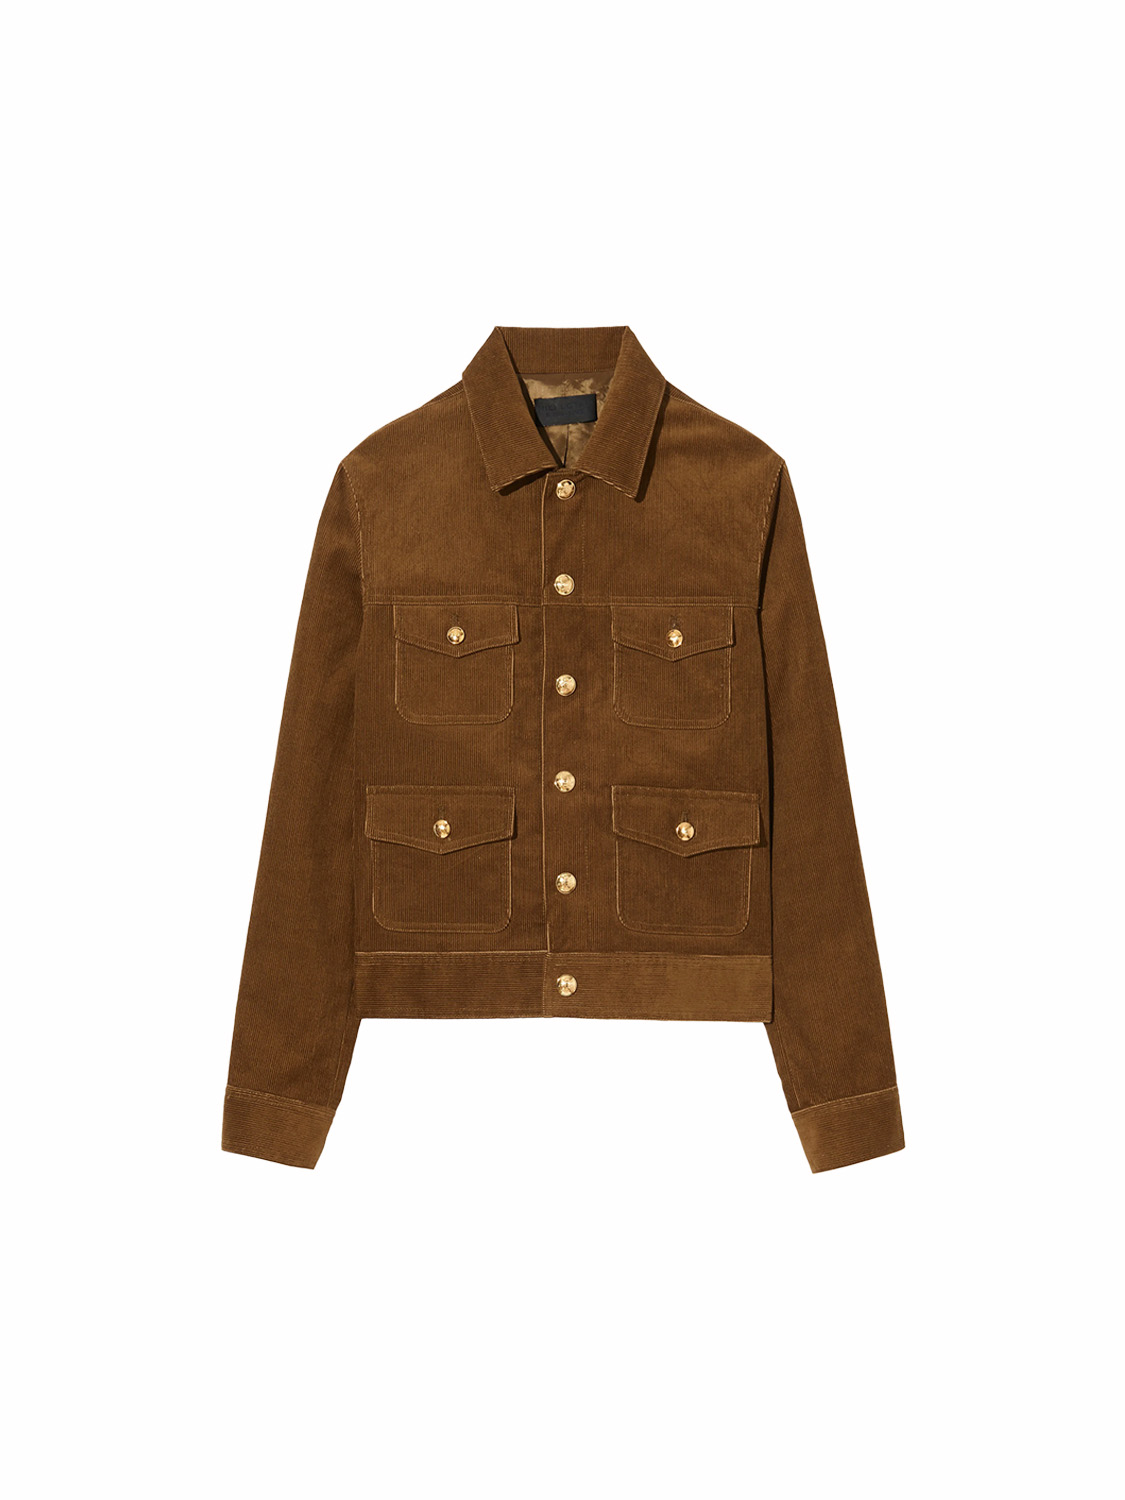 Lizeht – Short corduroy jacket